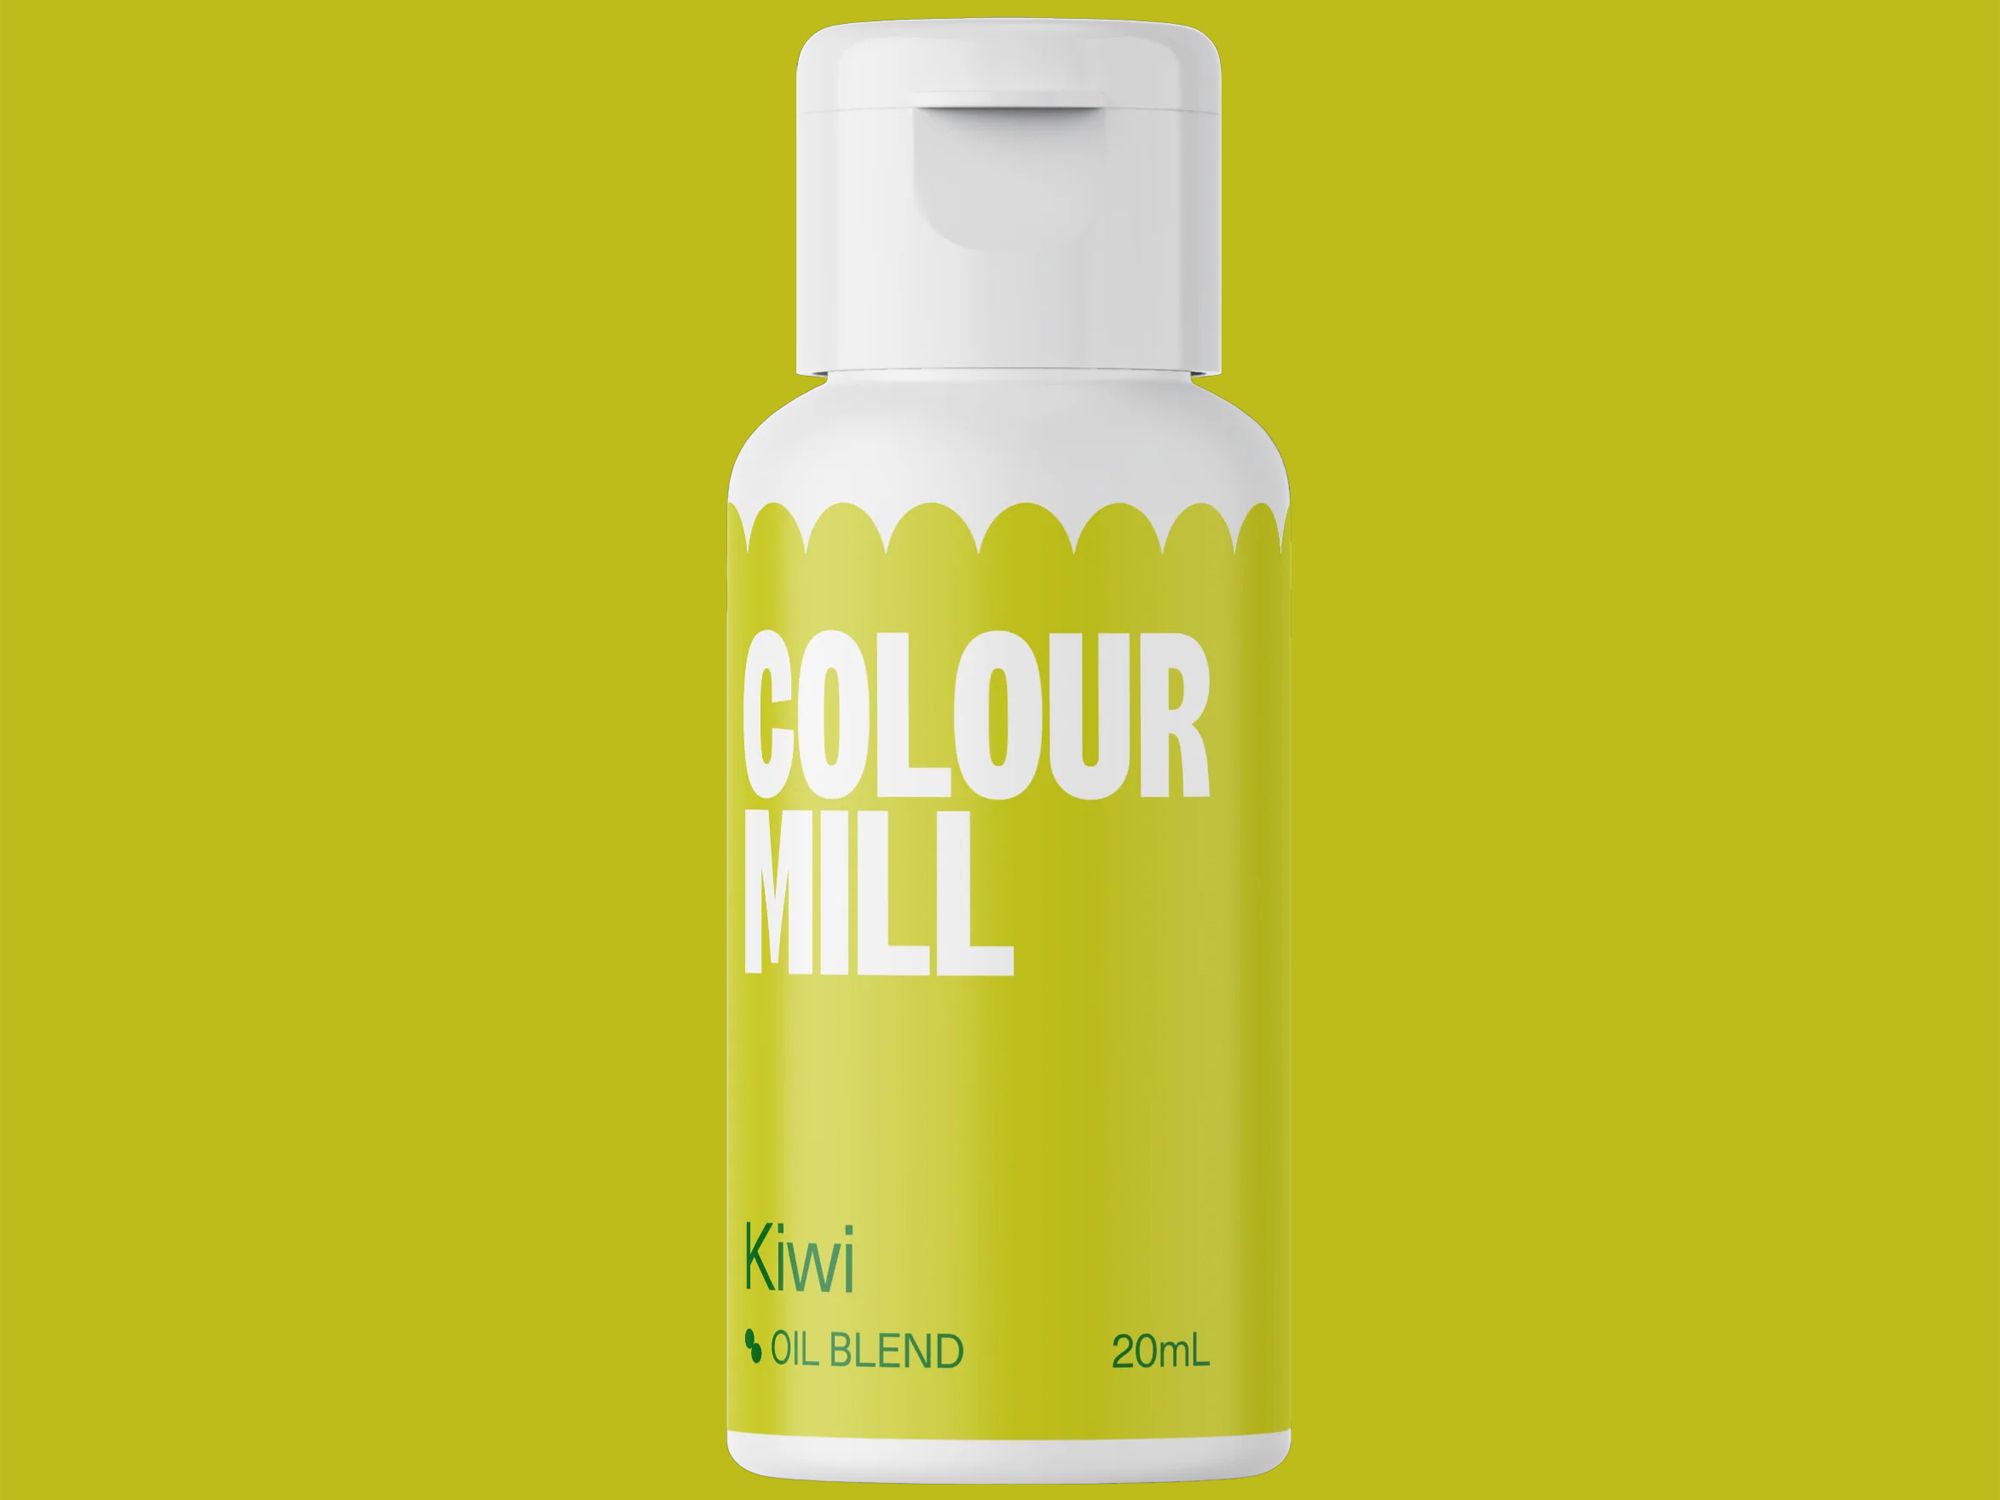 Colour Mill Kiwi (Oil Blend) 20ml